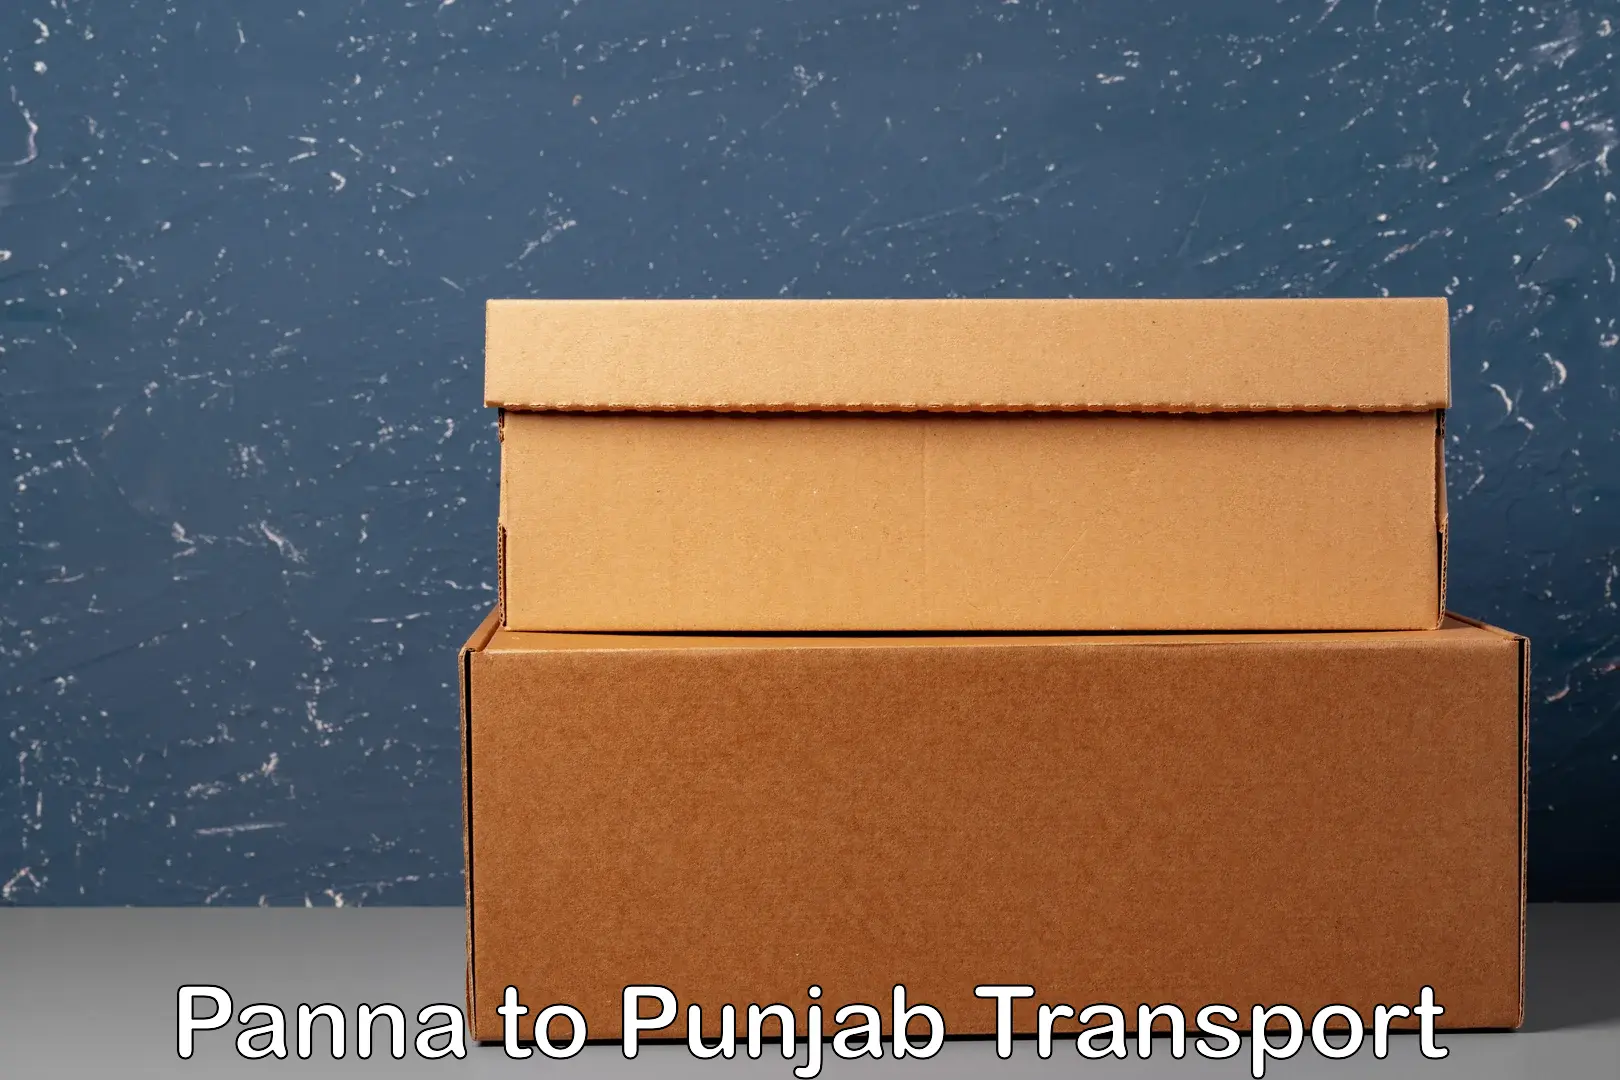 Nearby transport service Panna to Punjab